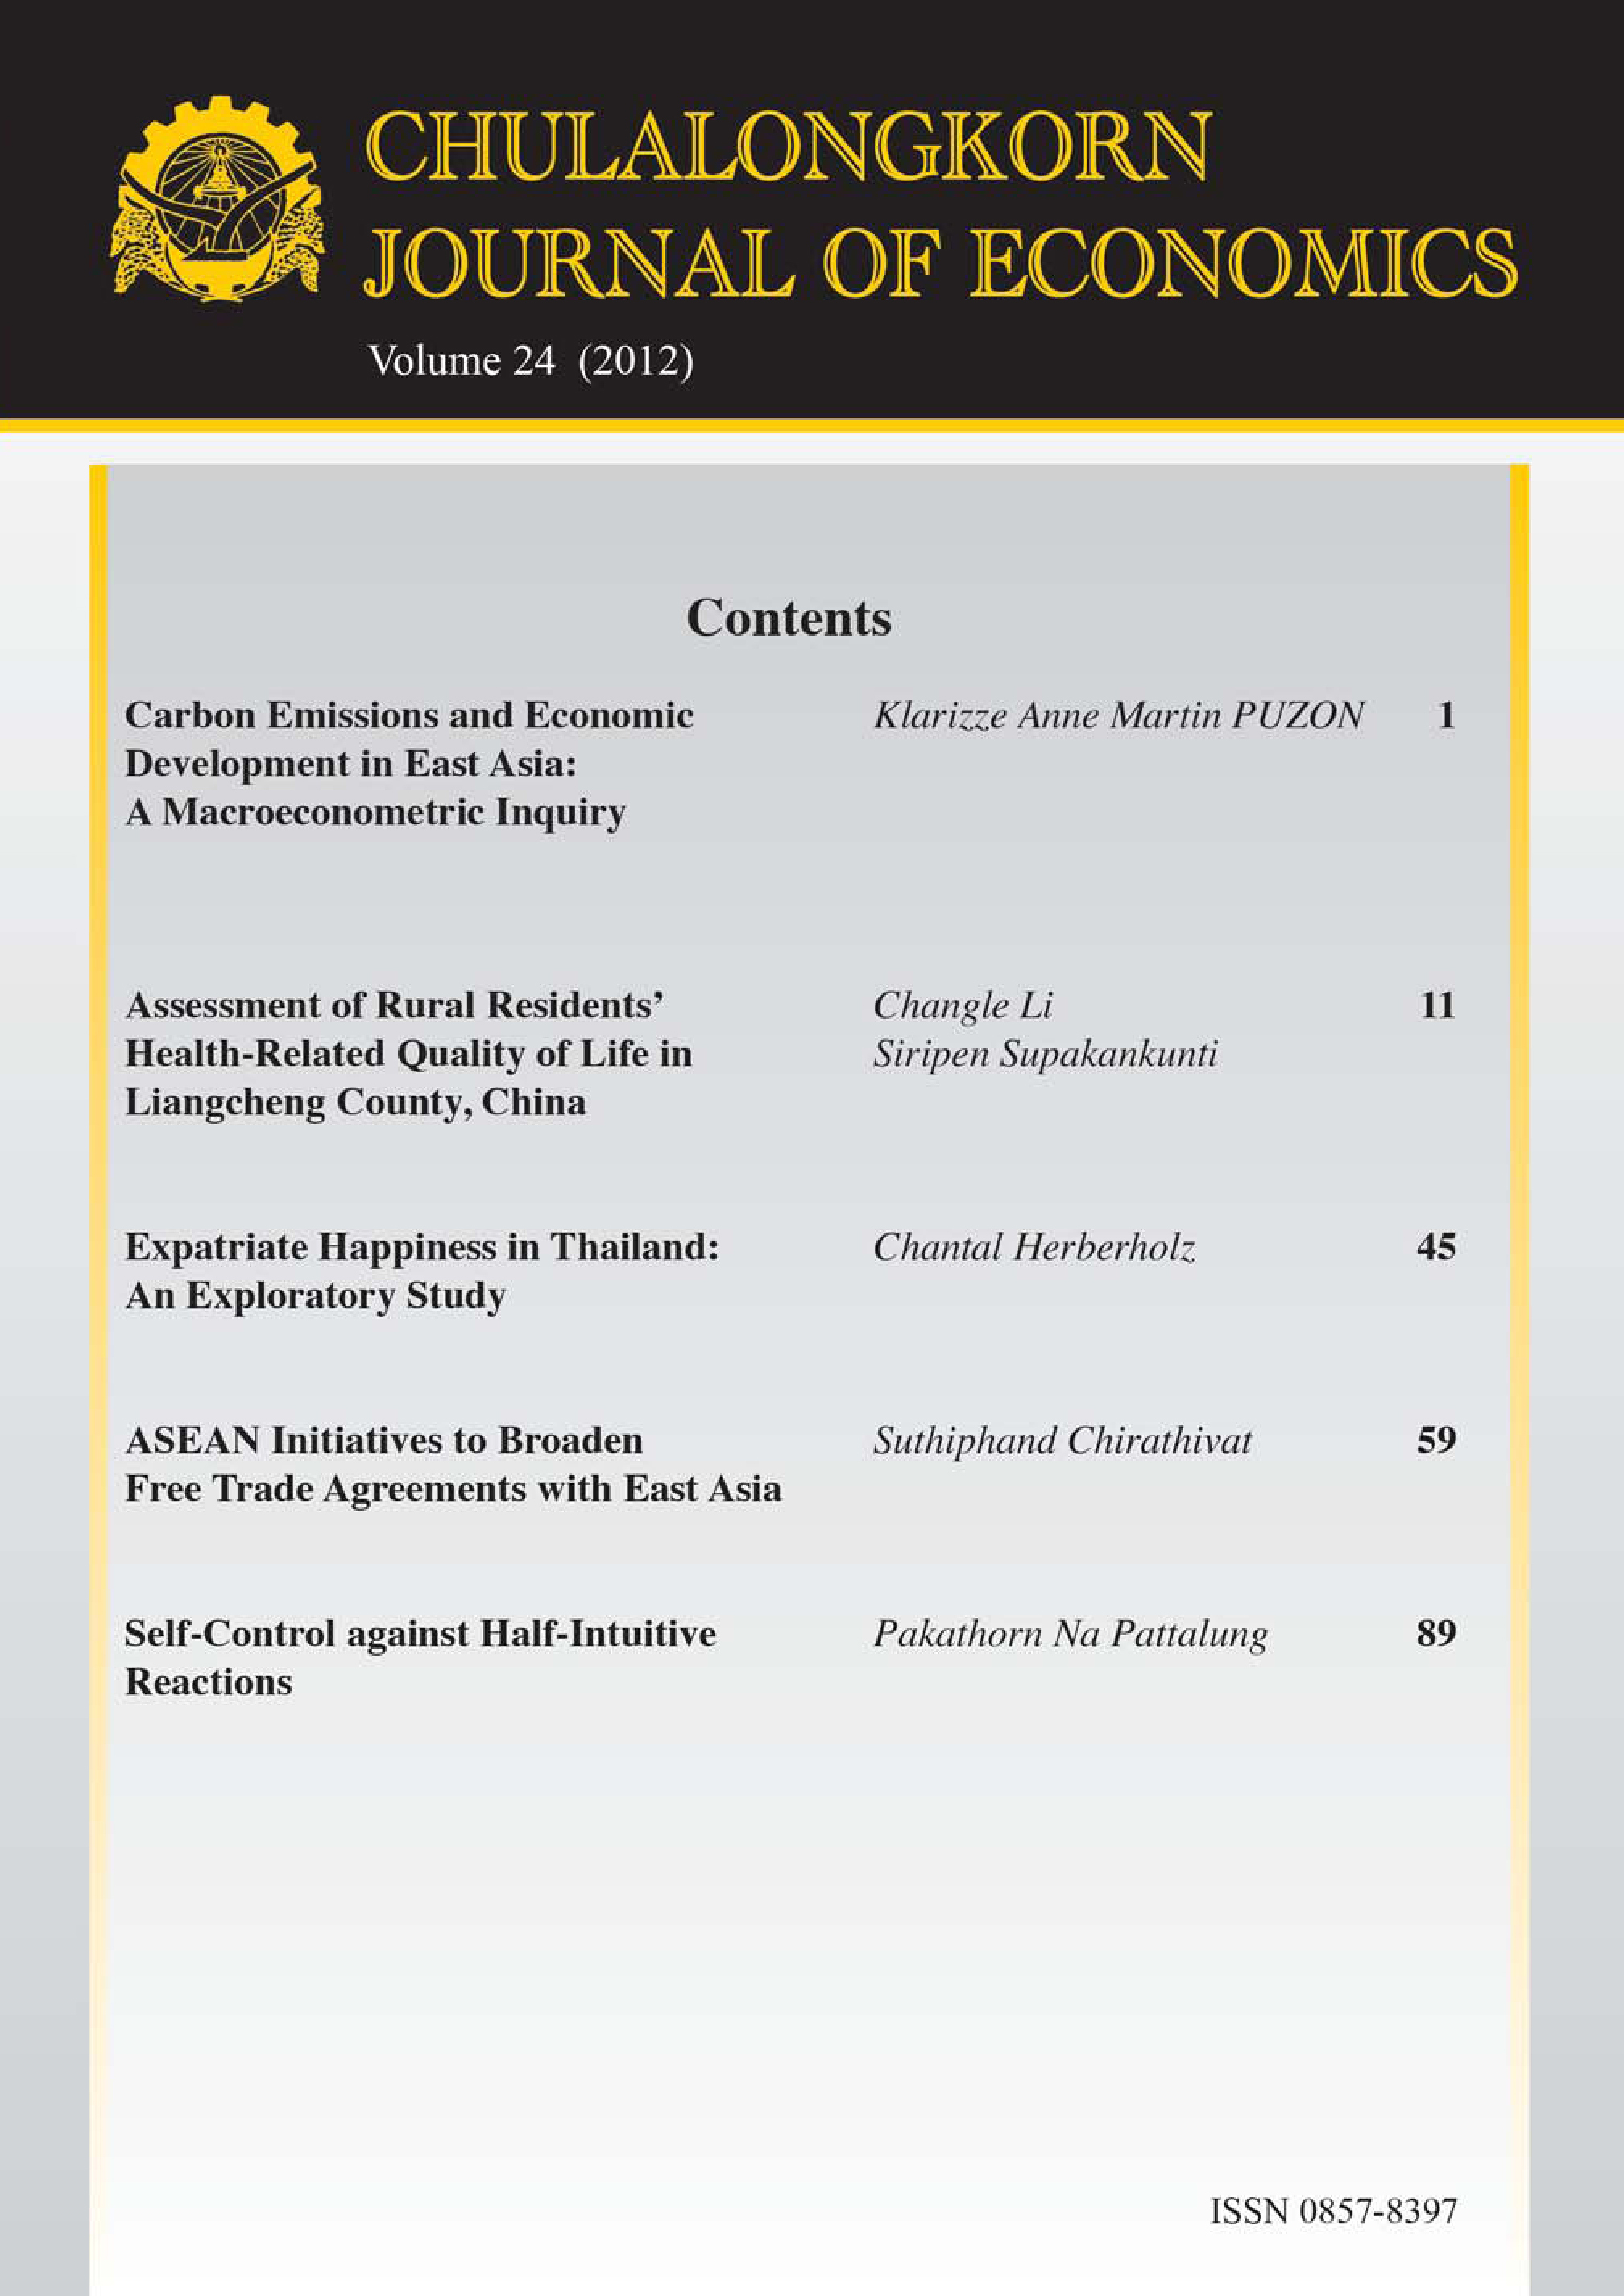 					View Chulalongkorn Journal of Economics, Vol. 24 No. 1 (January - December 2012)
				